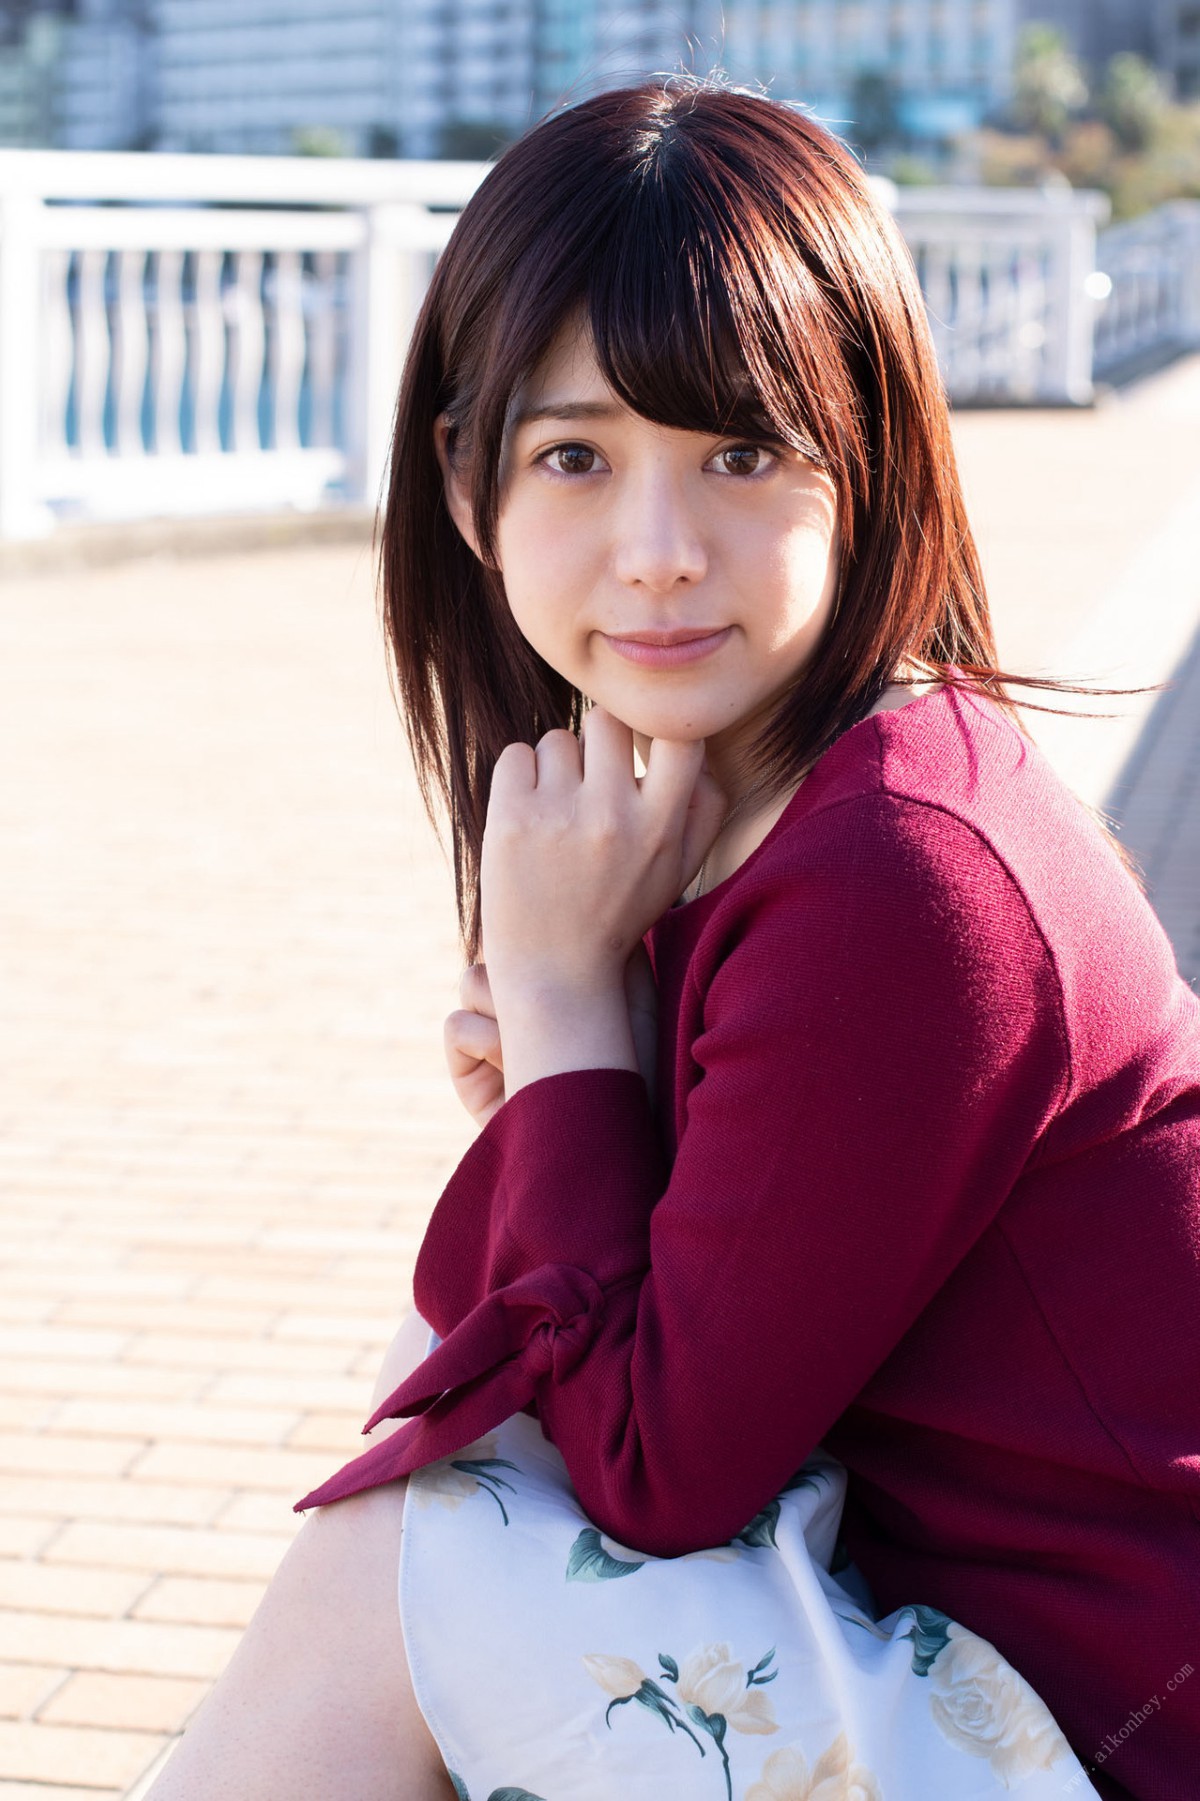 Photobook 2019 07 19 Asuna Kawai Maria Aine Nozomi Arimura 2 Days 1 Night Hot Spring Date 0053 8244156824.jpg